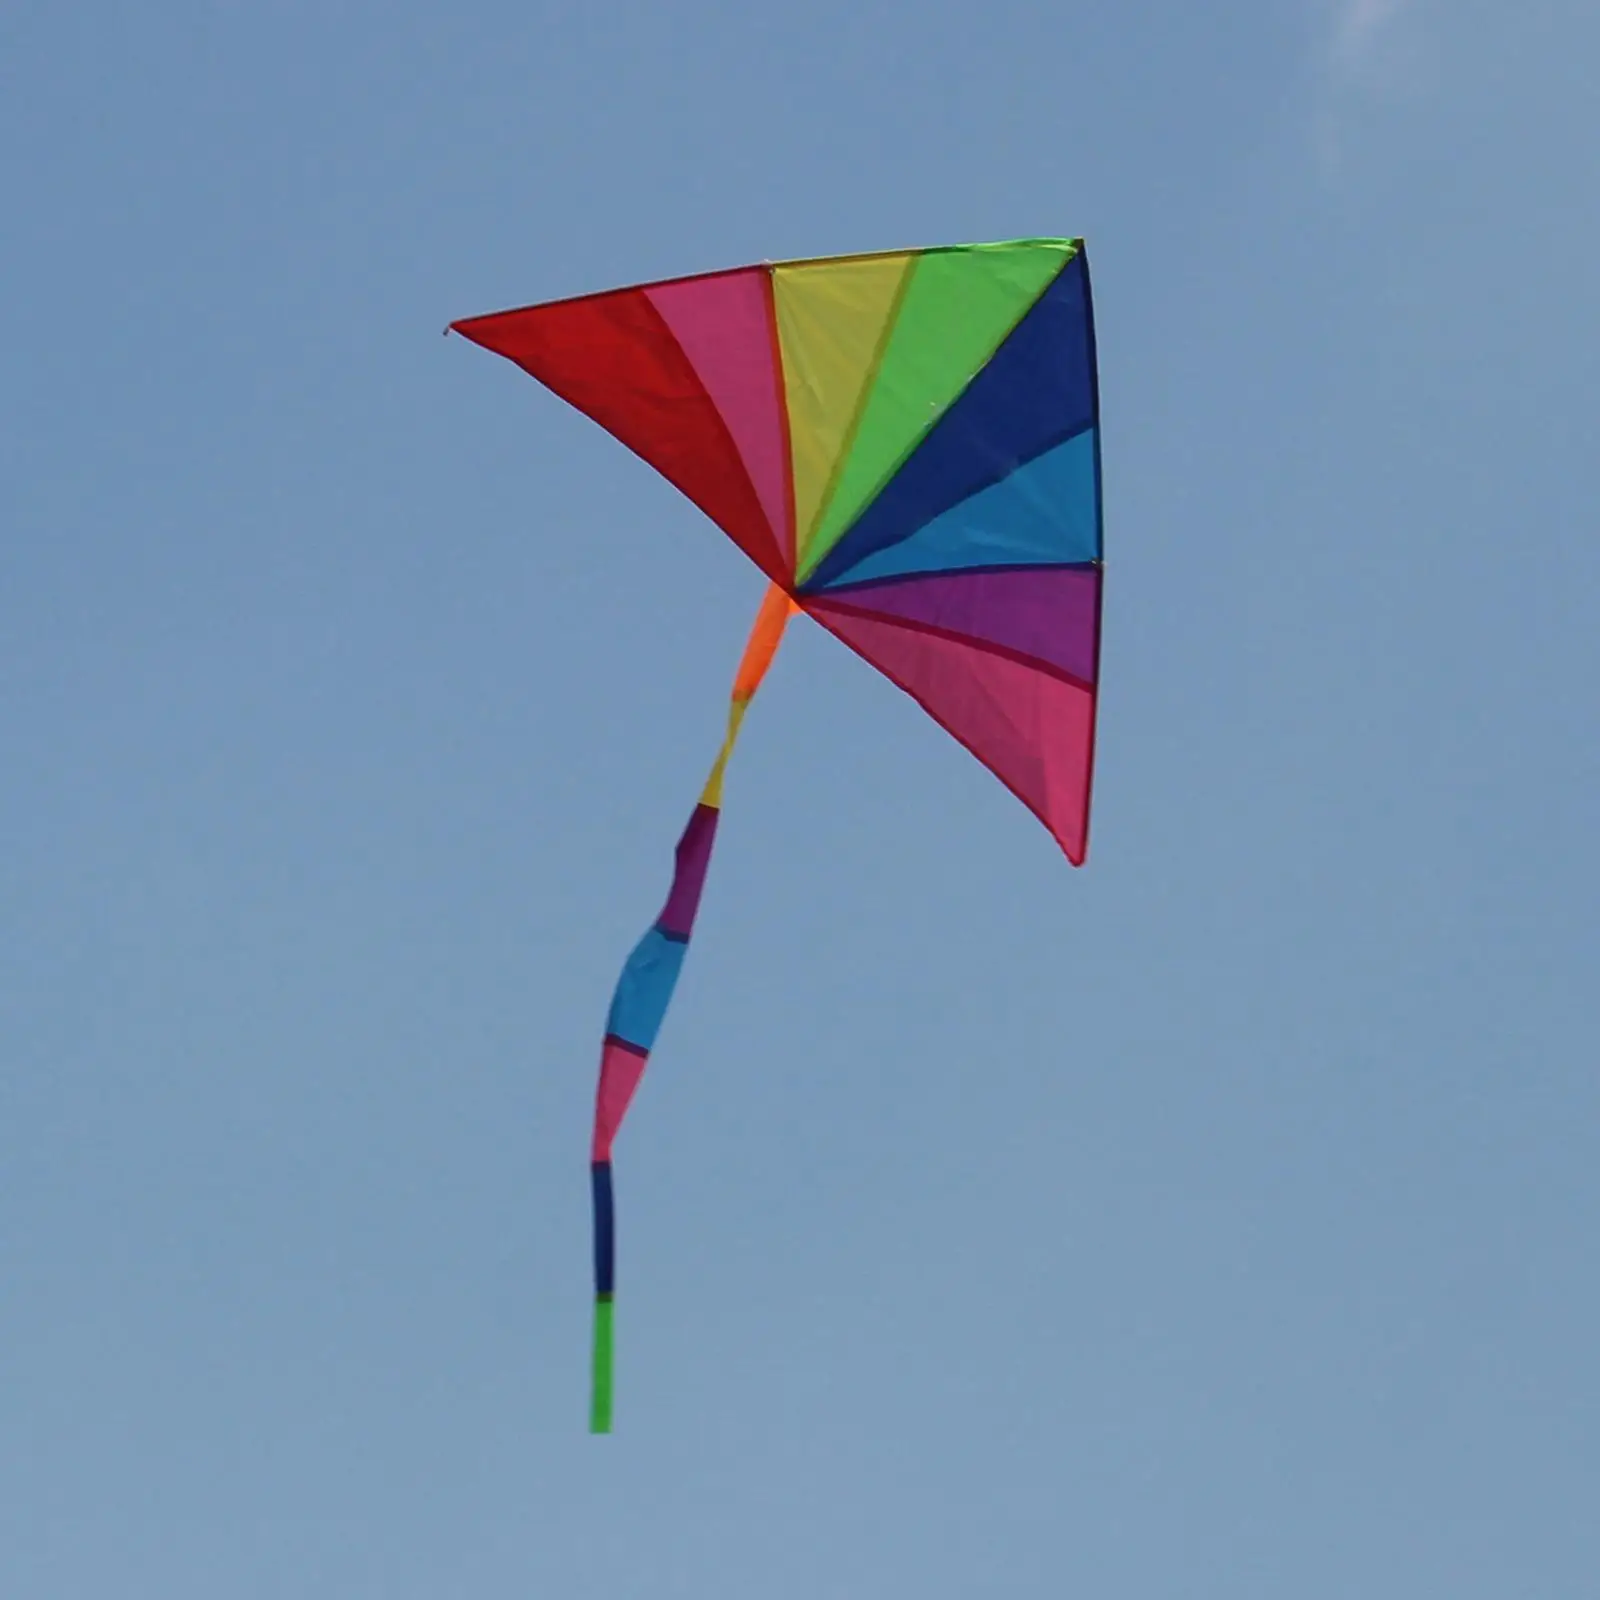 Rainbow Delta Kite Huge Single Line Windsock Giant Triangle Kite Park Beach Toy Activities Beginner